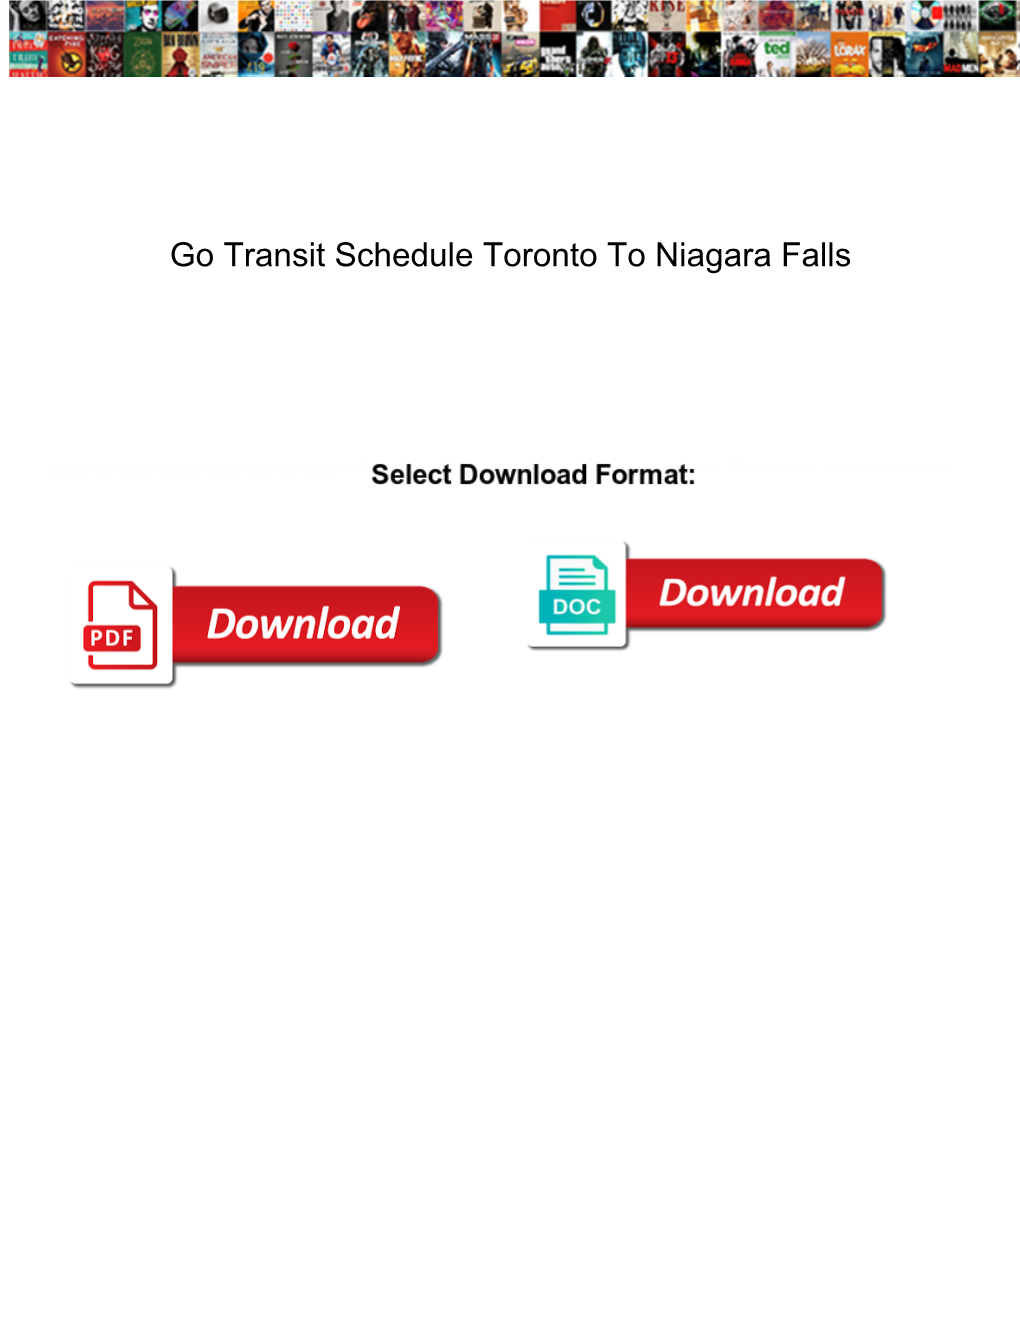 Go Transit Schedule Toronto to Niagara Falls